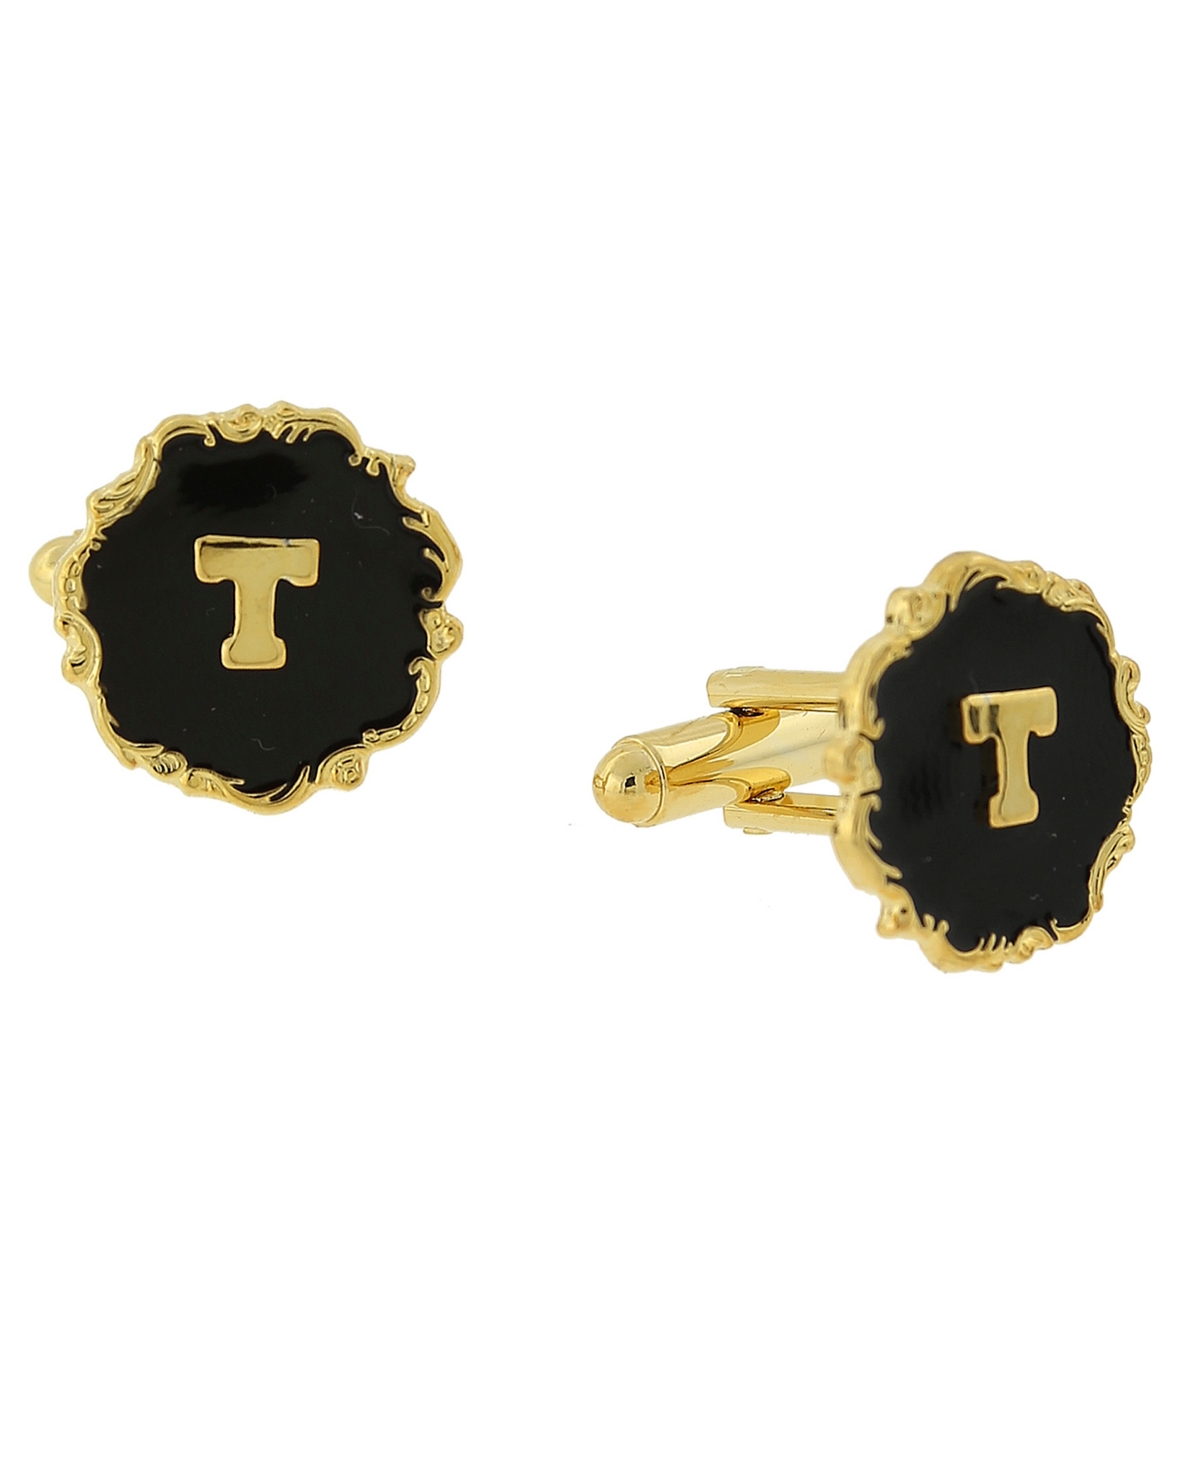 Jewelry 14K Gold-Plated Enamel Initial T Cufflinks - Black